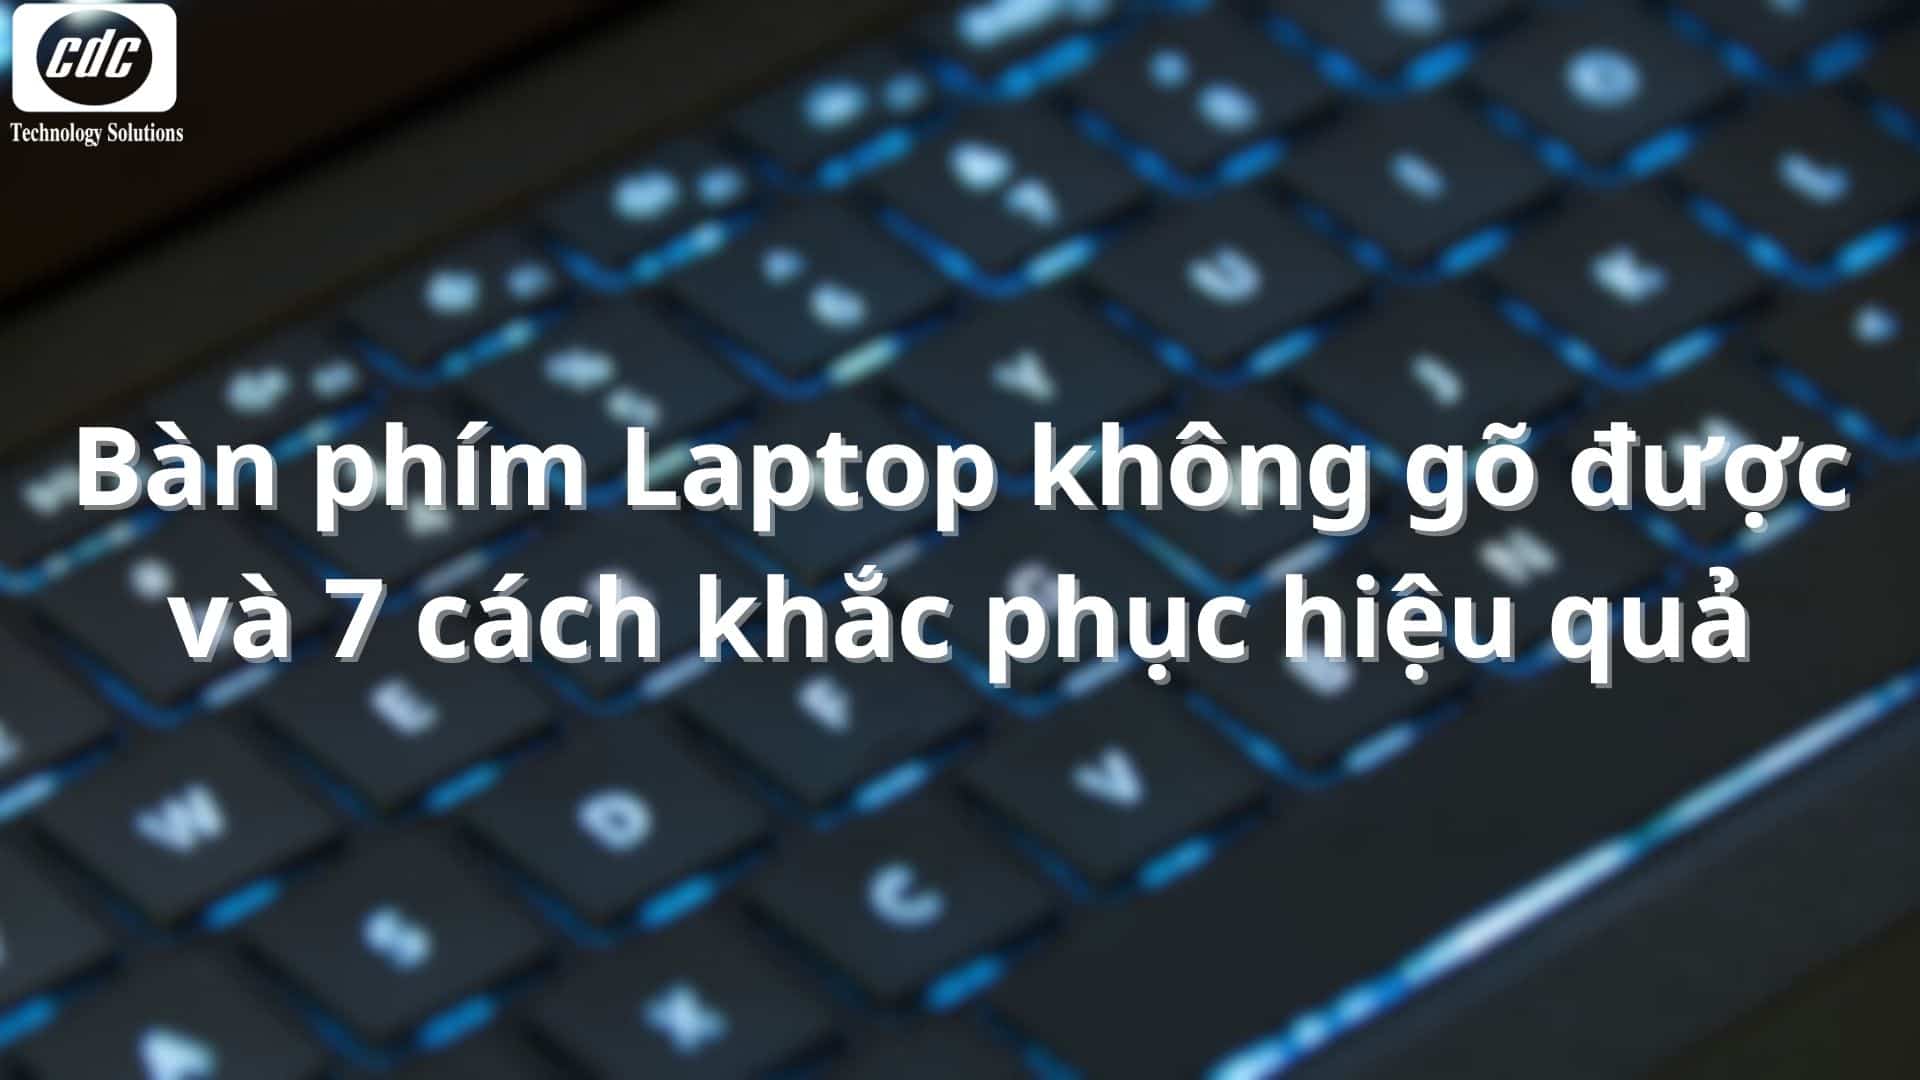 ban-phim-laptop-khong-go-duoc-01